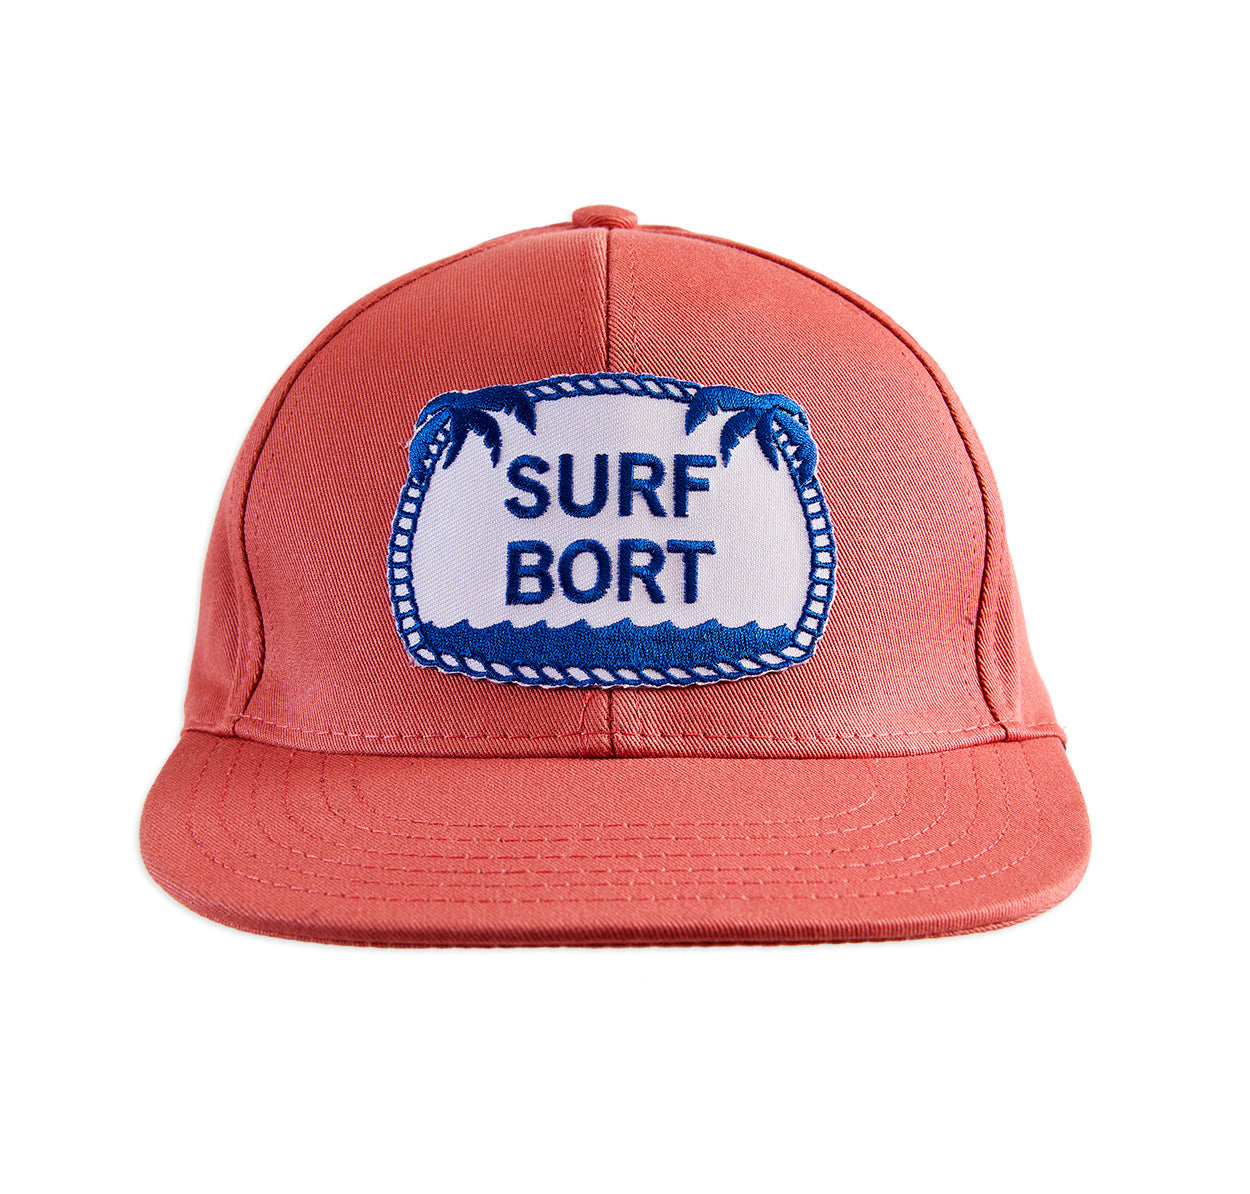 Surfbort ball cap